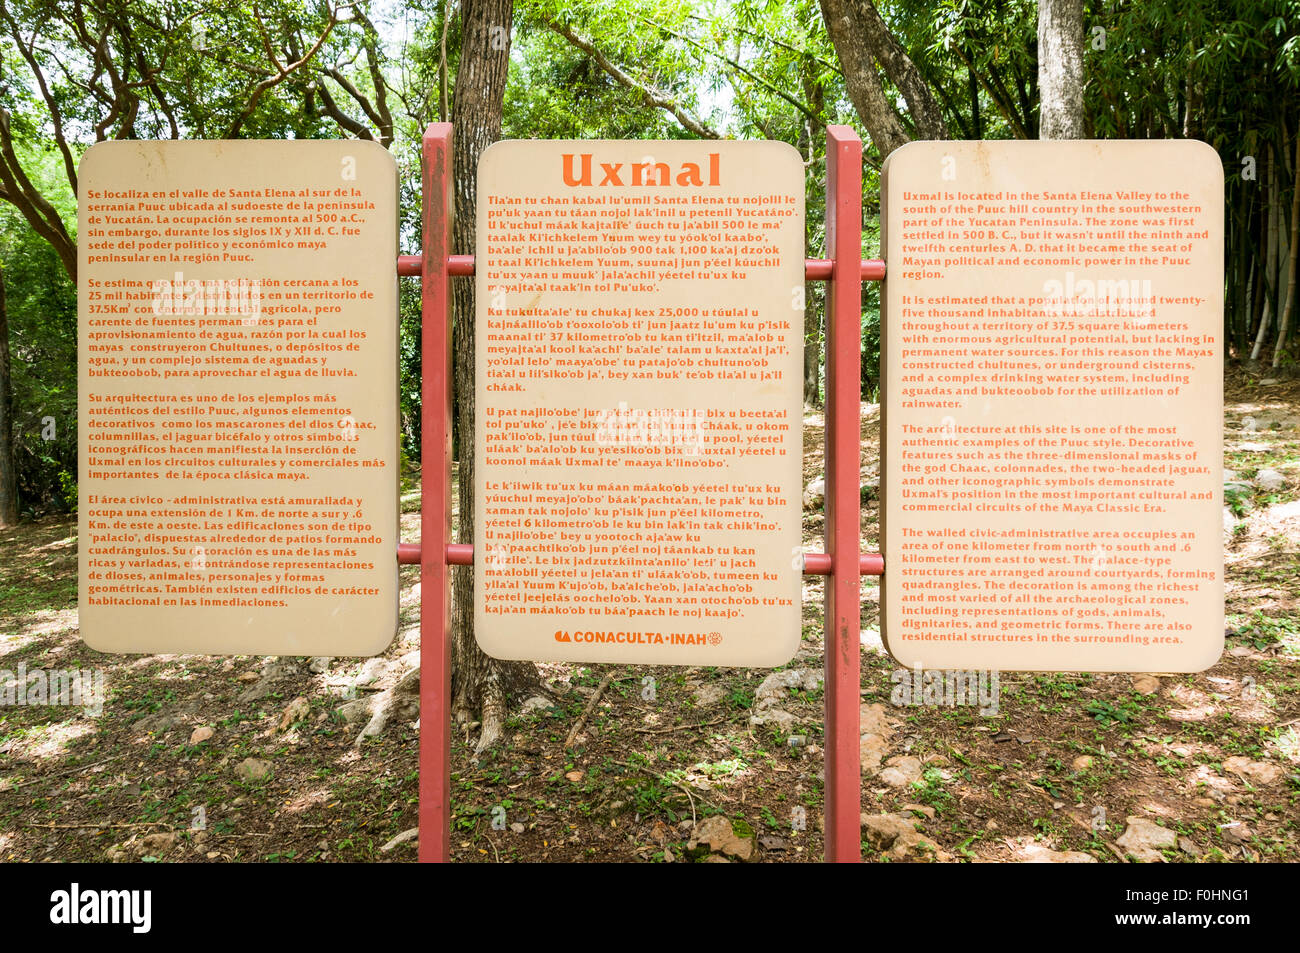 Information sign at the entrance to Mayan ruins at Uxmal in the Yucatan, Mexico Stock Photo